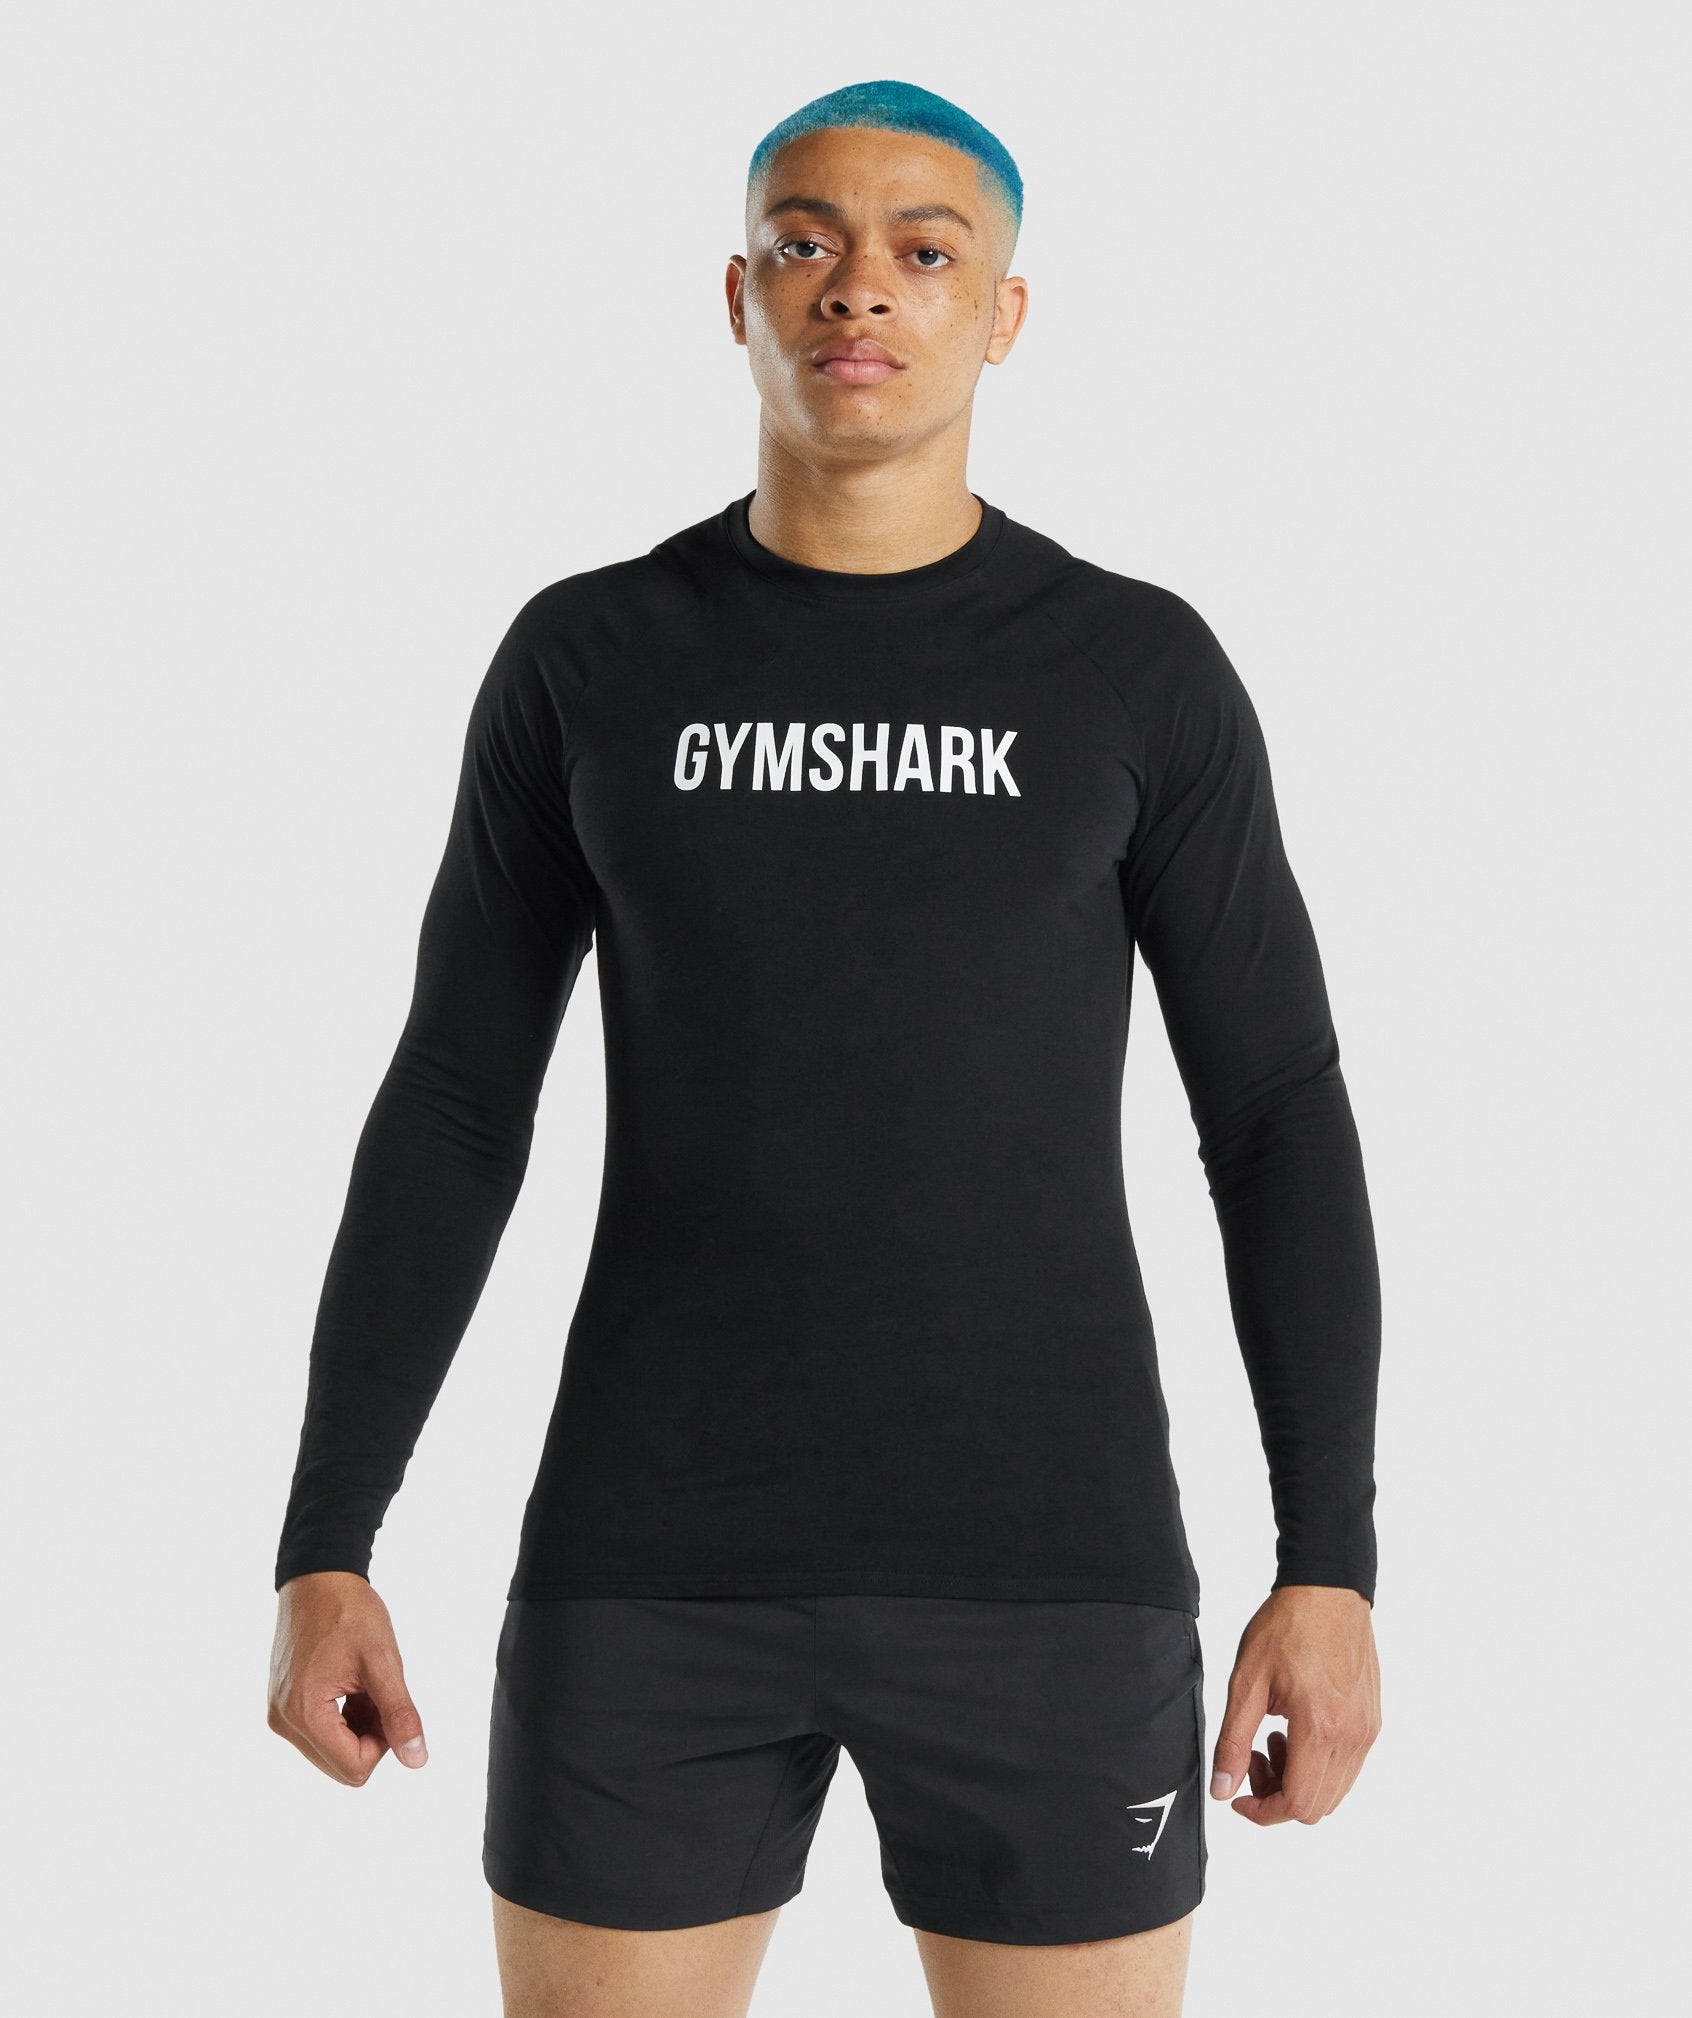 Gym shark gymshark apollo black, Men's Fashion, Activewear on